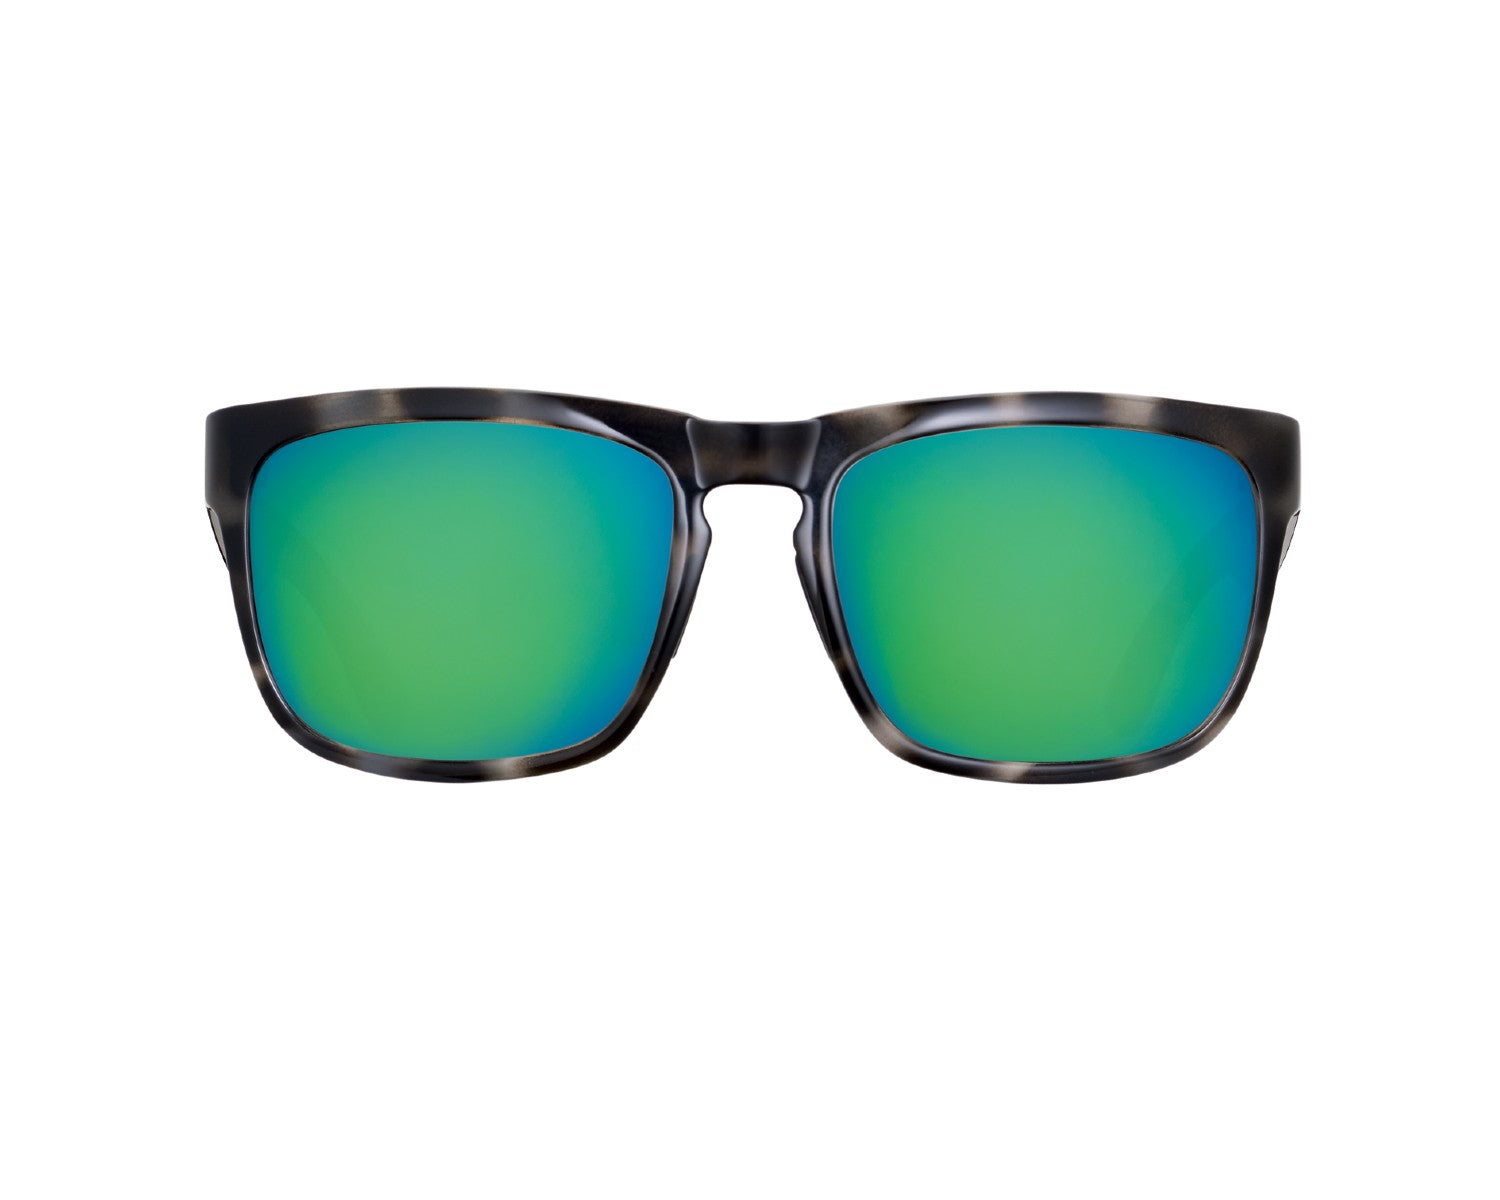 O'NEILL Trevose POLARIZED Sunglasses Matte Black/Blue Mirror Surf/Beach NEW  $59 | eBay